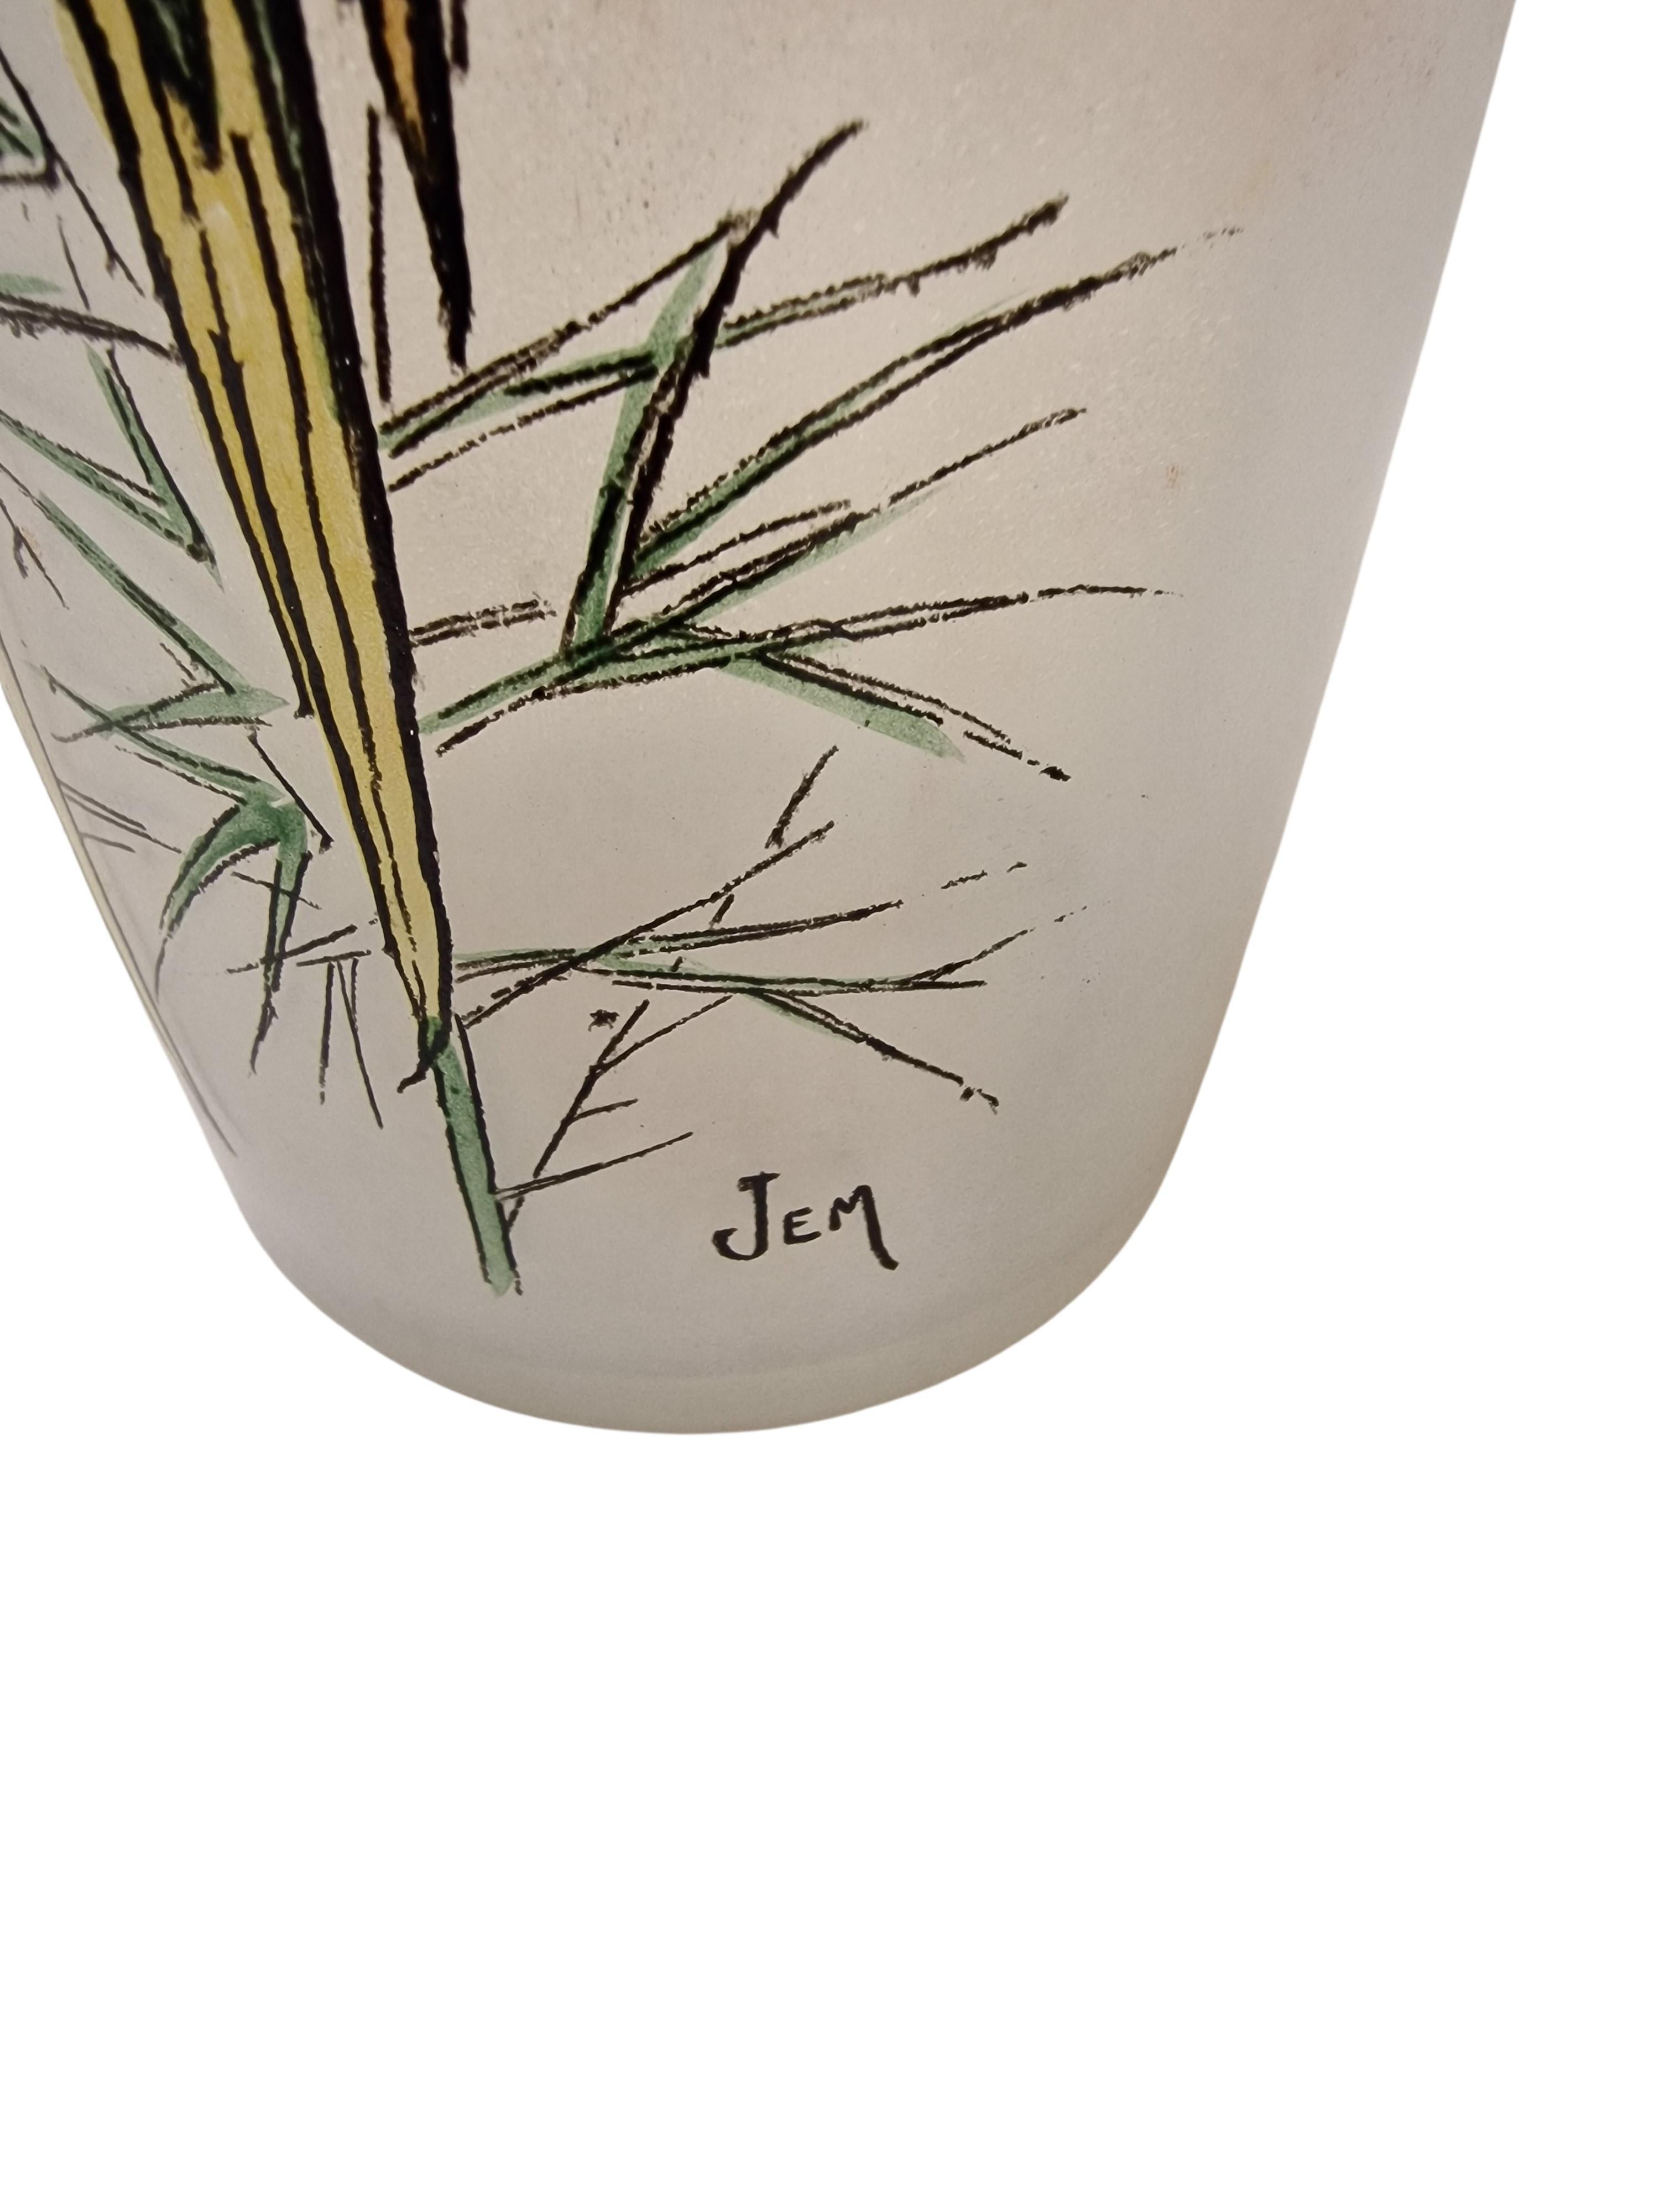 French Pair of Flower Vases Legras signed, budgie bird decor, glass enamel, 1920 France For Sale